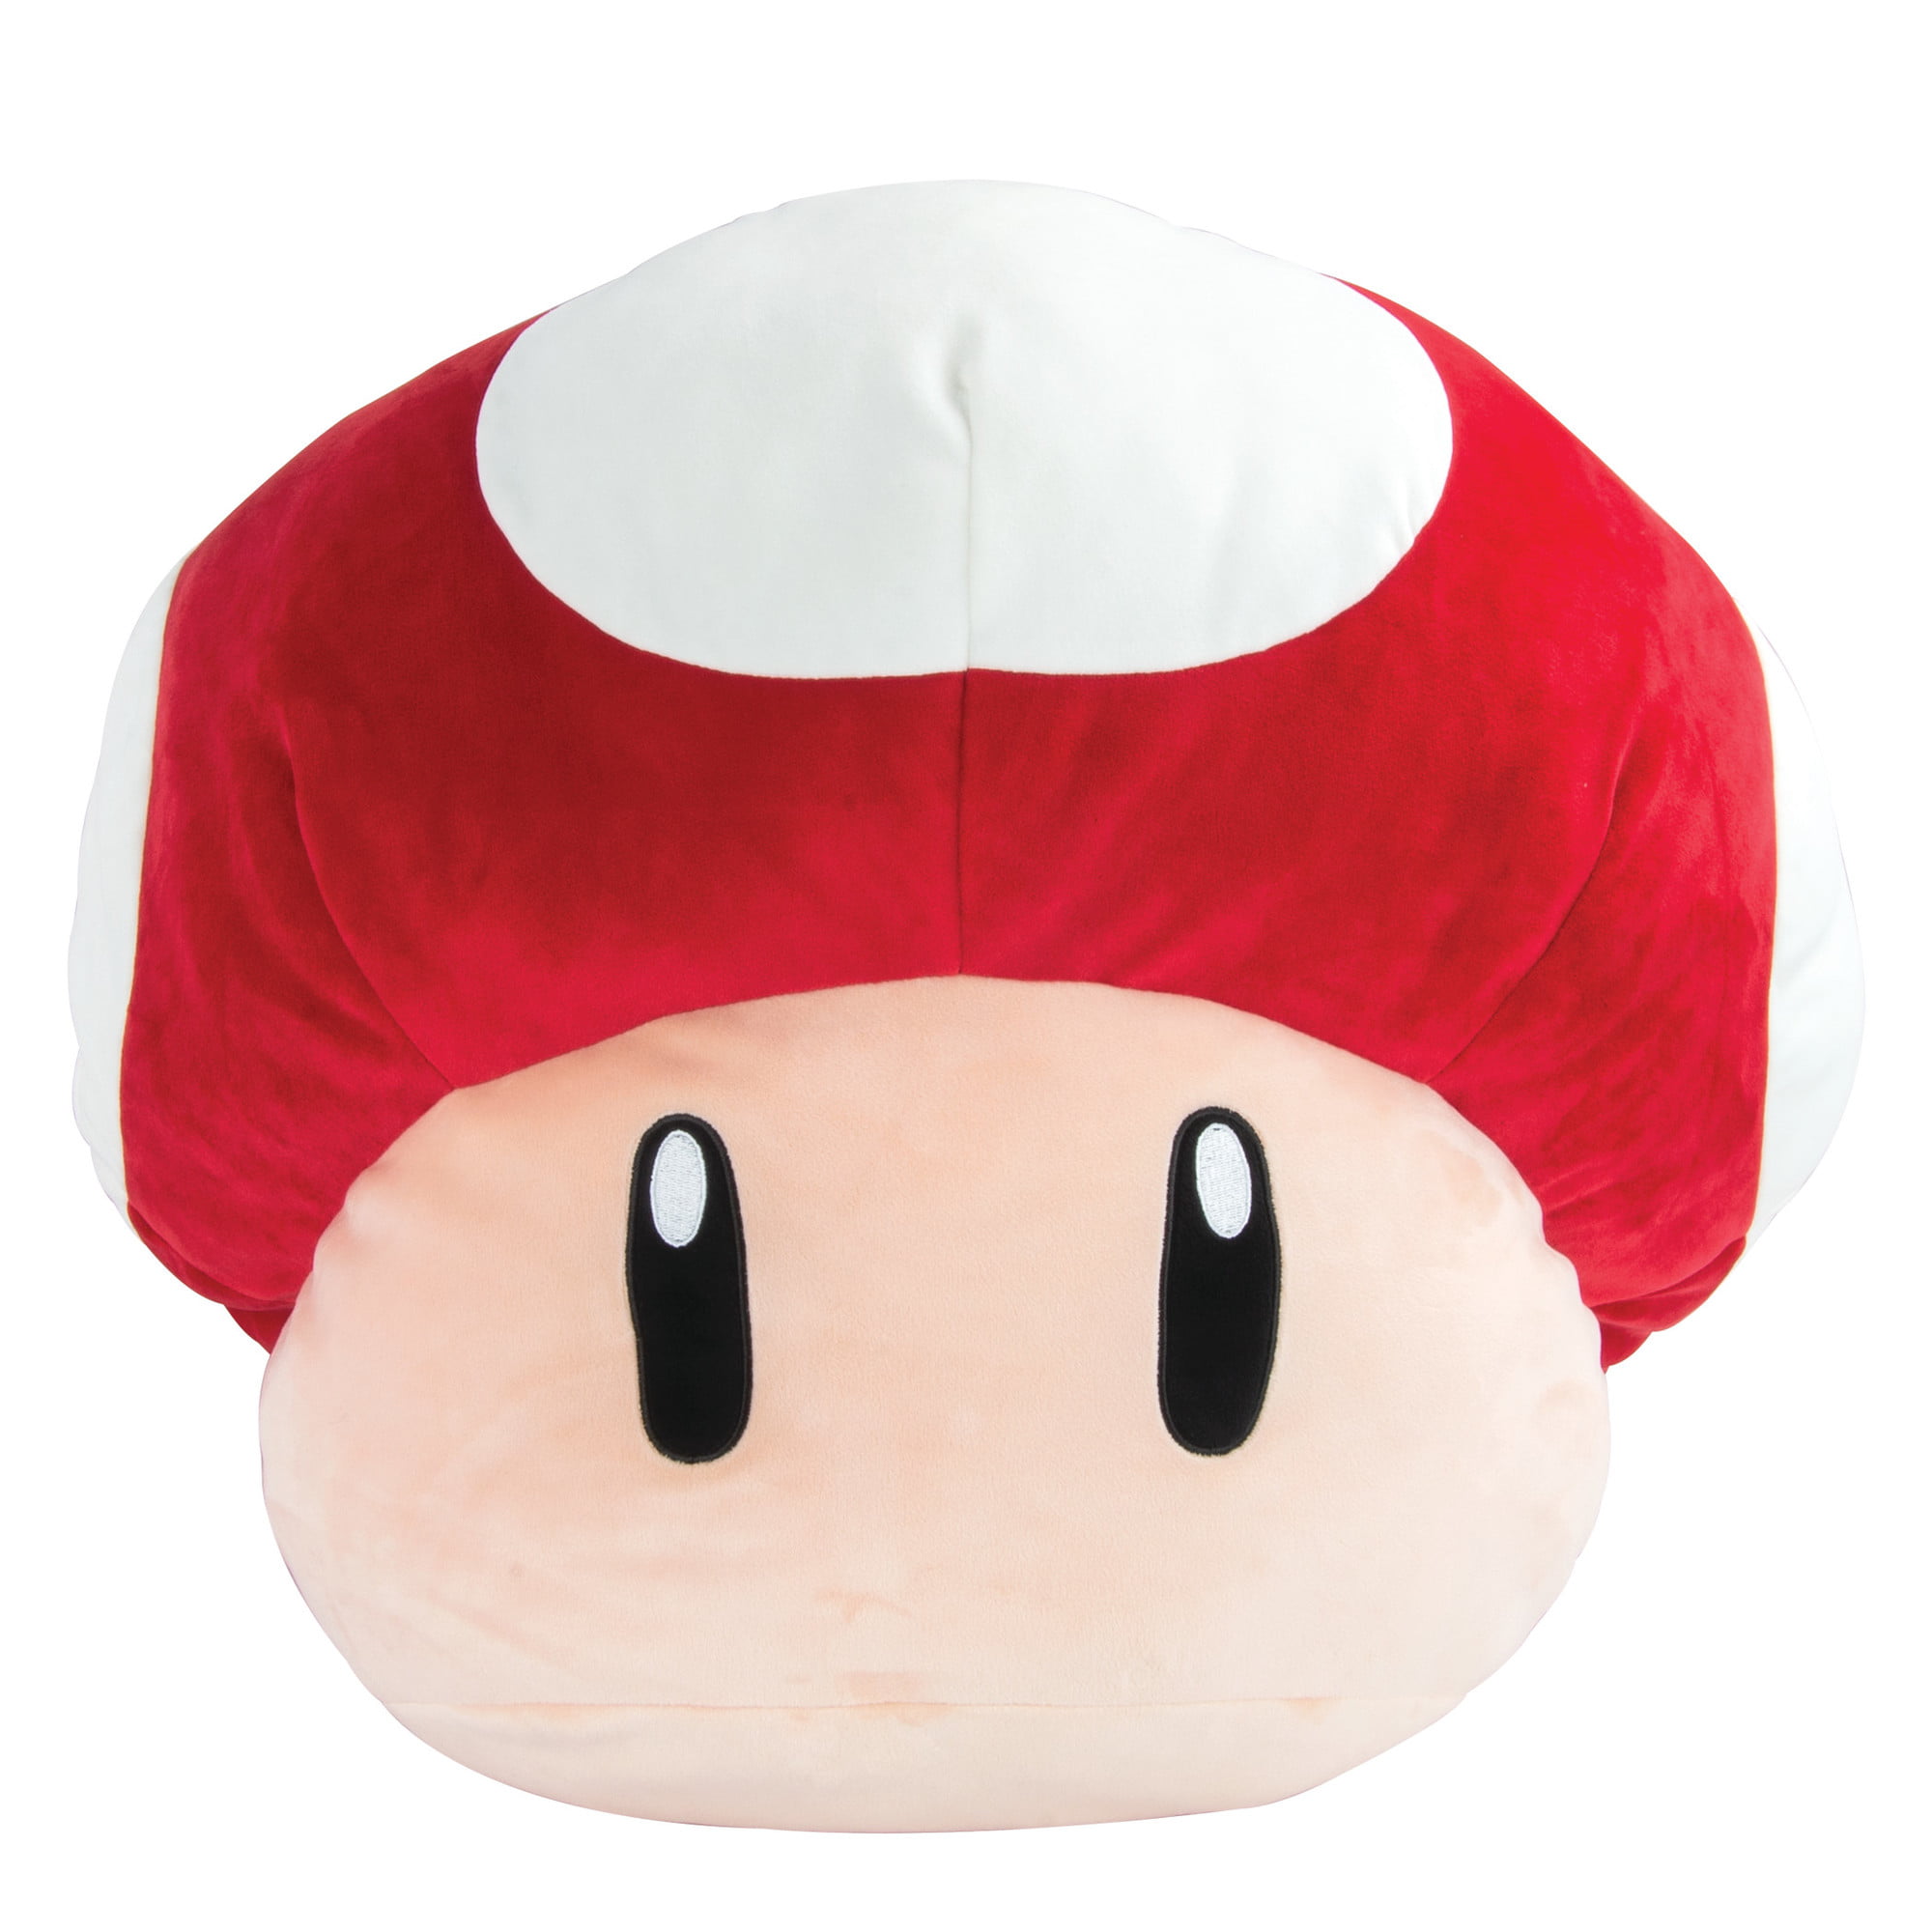 2pcs Super Mario Bros Super 1-UP Mushroom Plush Toy Stuffed Aniaml Doll Game 6''